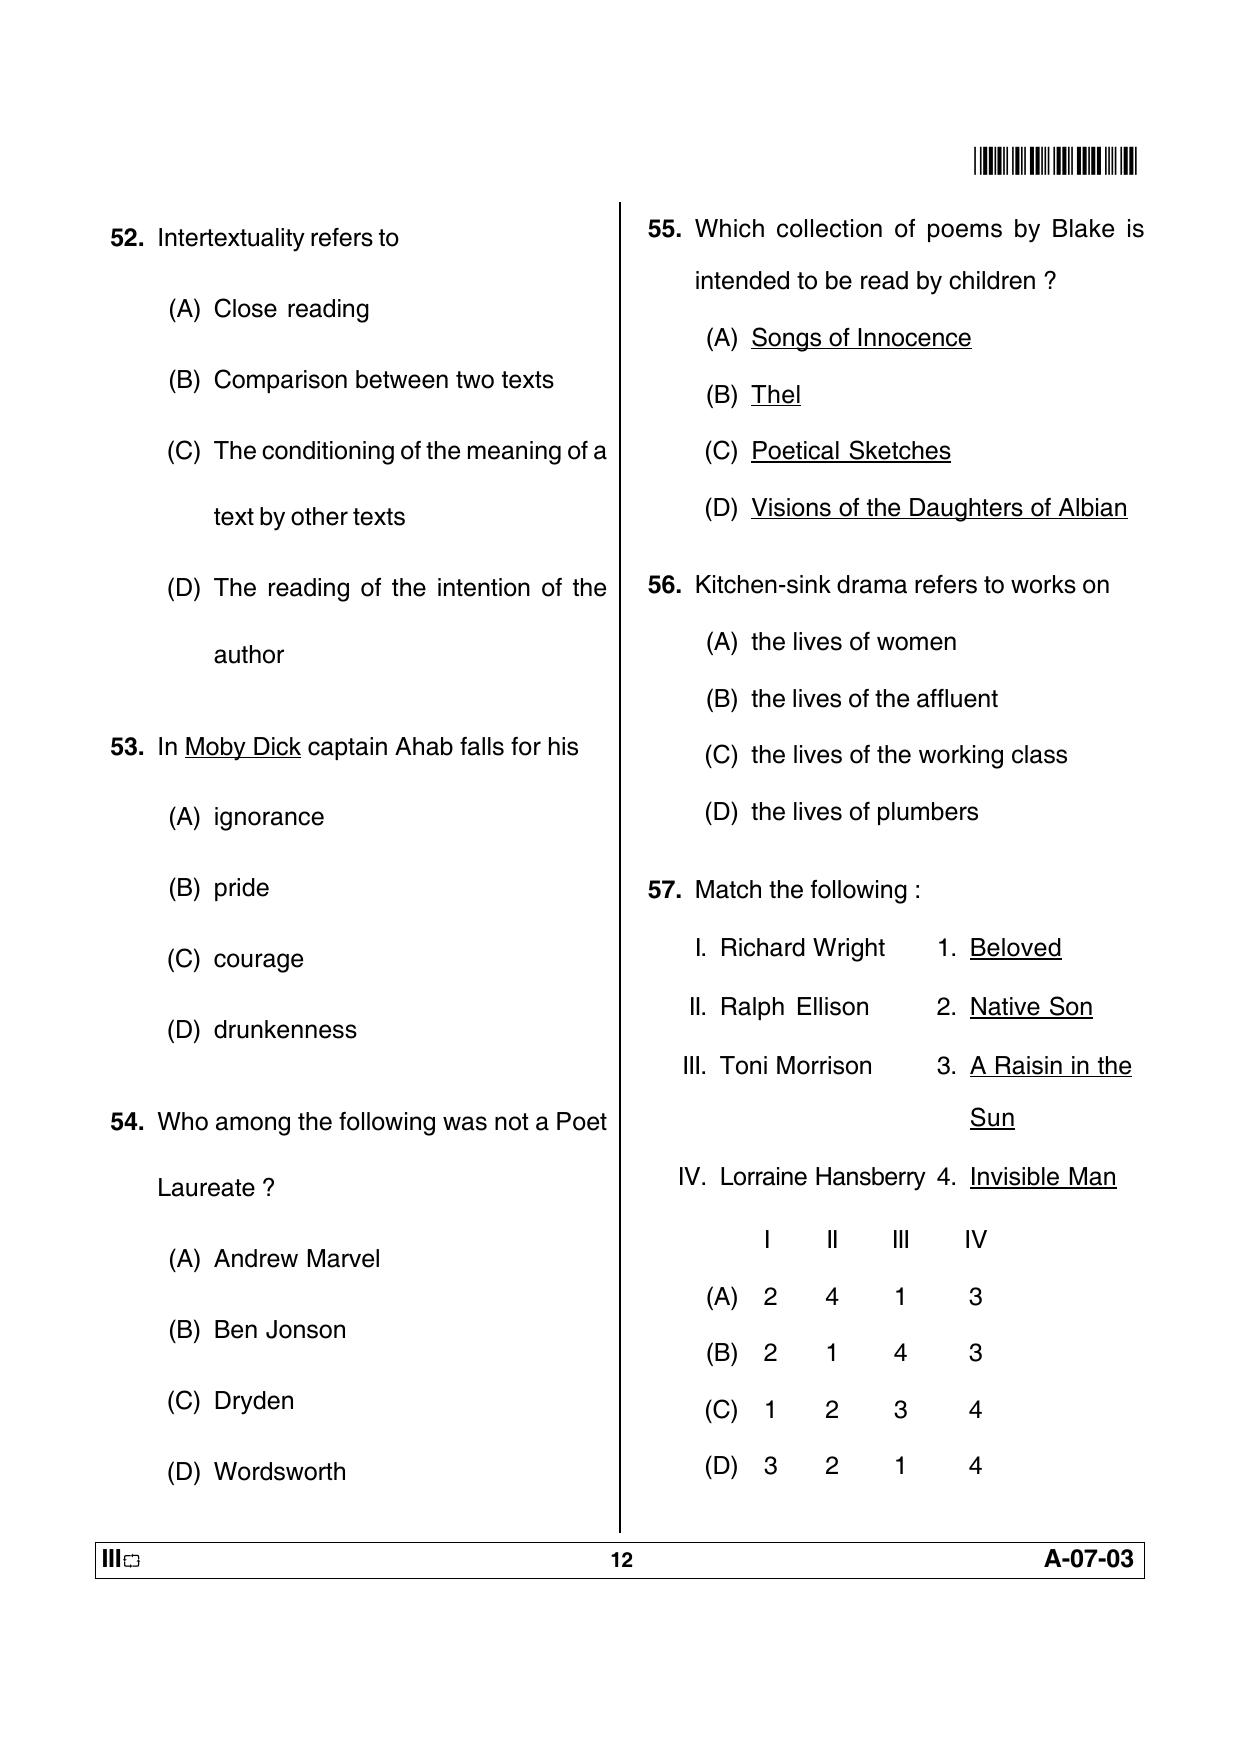 APSET English Previous Paper PDF - Page 12